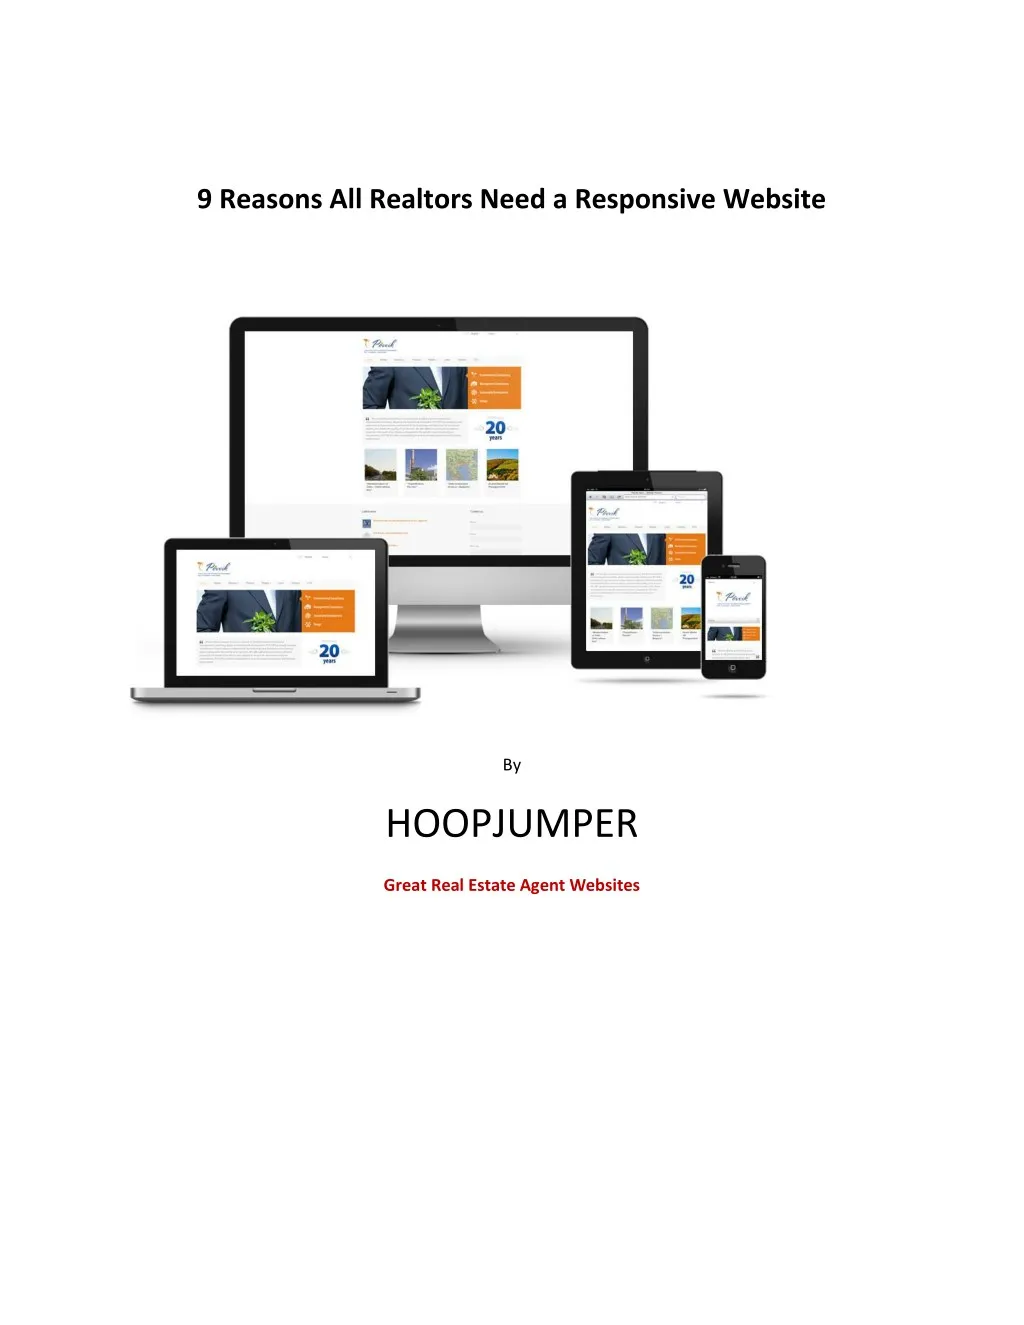 9 reasons all realtors need a responsive website